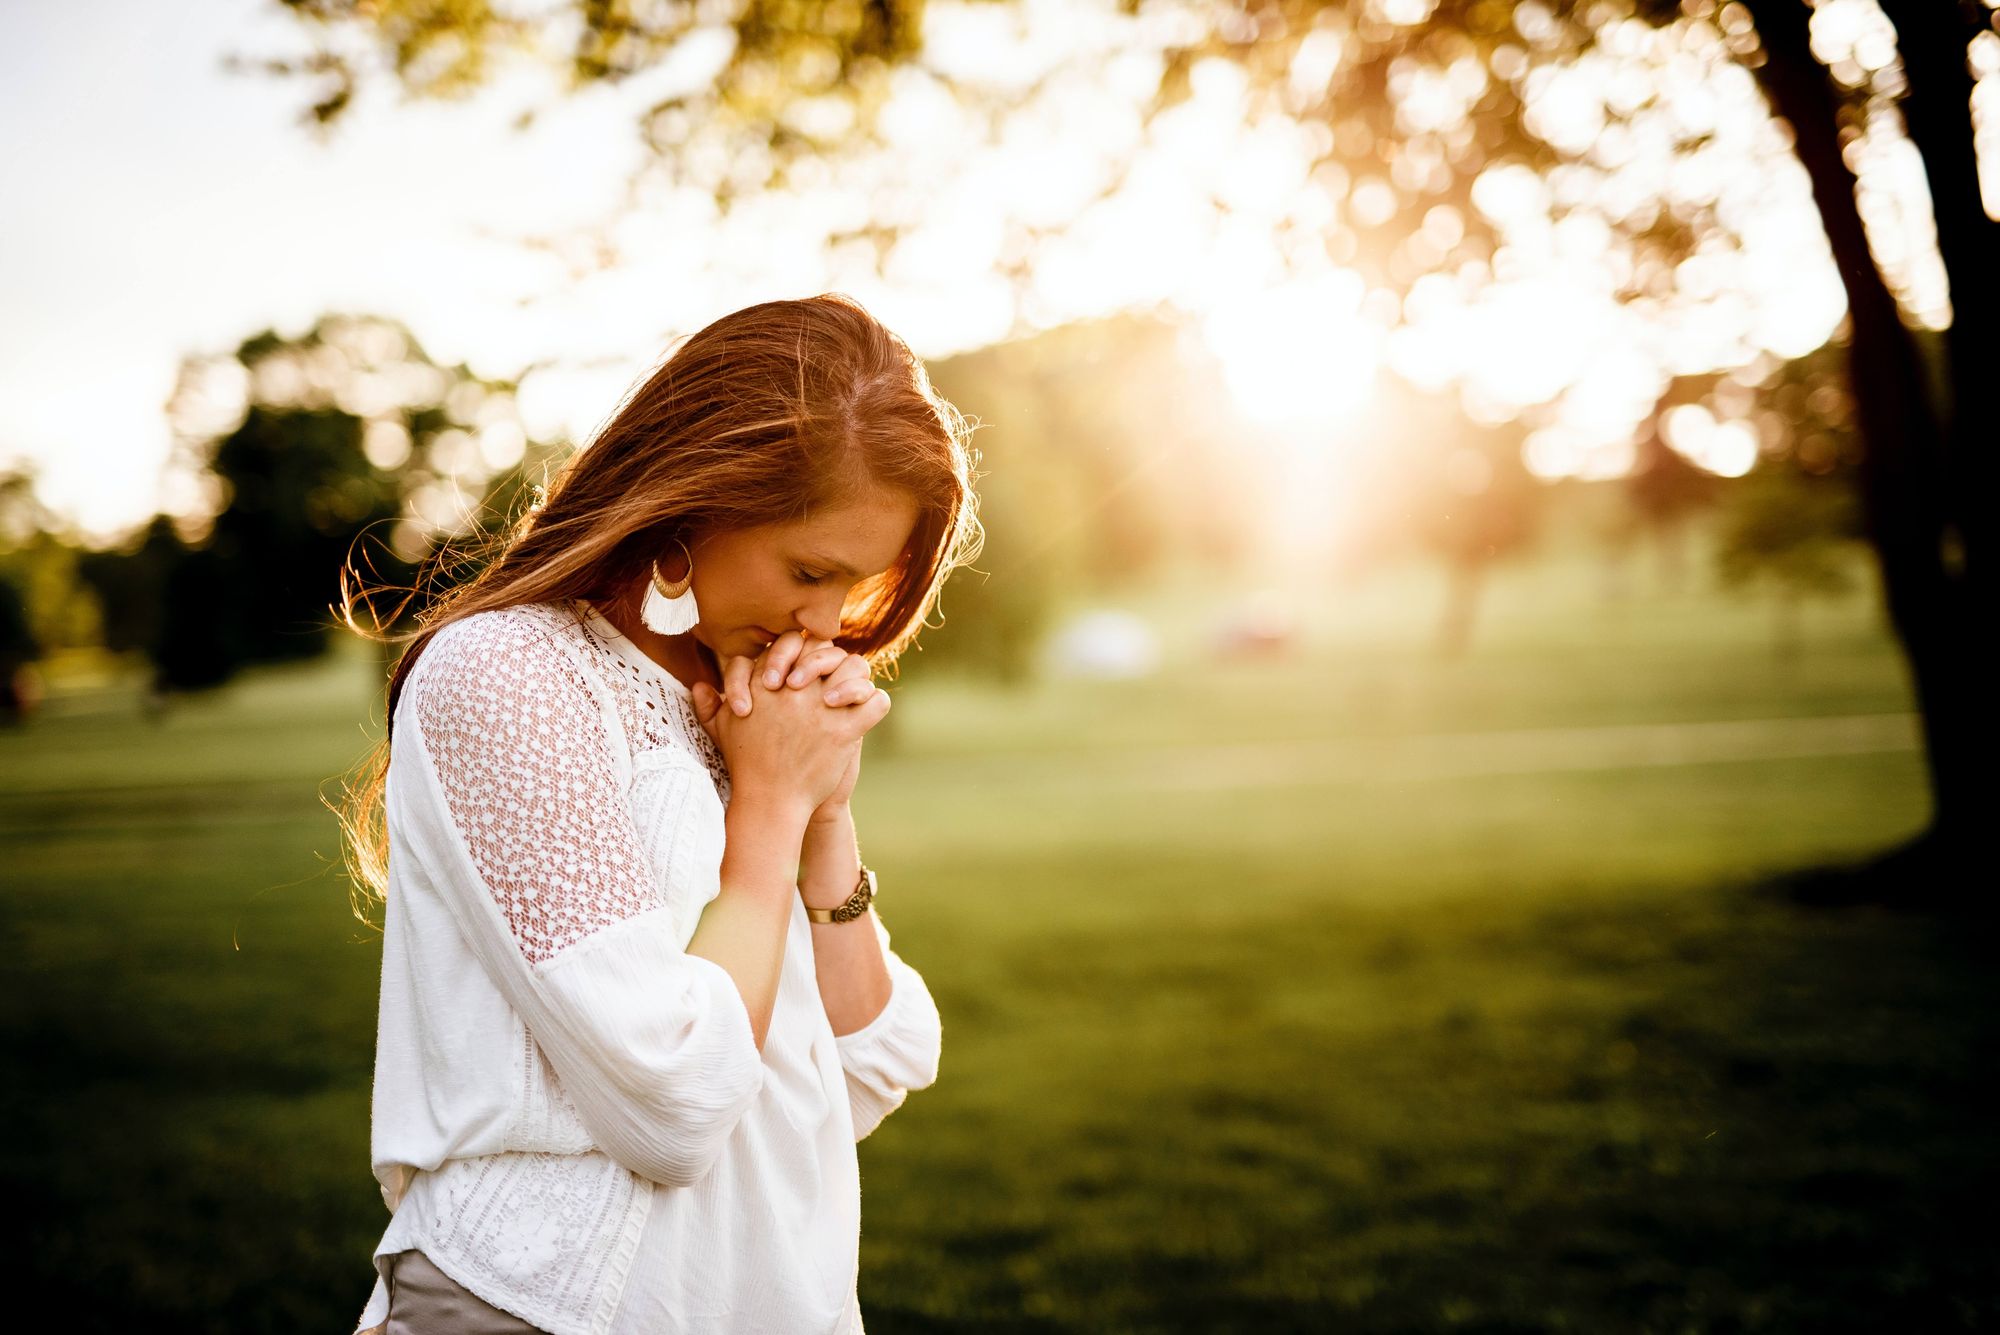 Woman praying in an outdoor setting